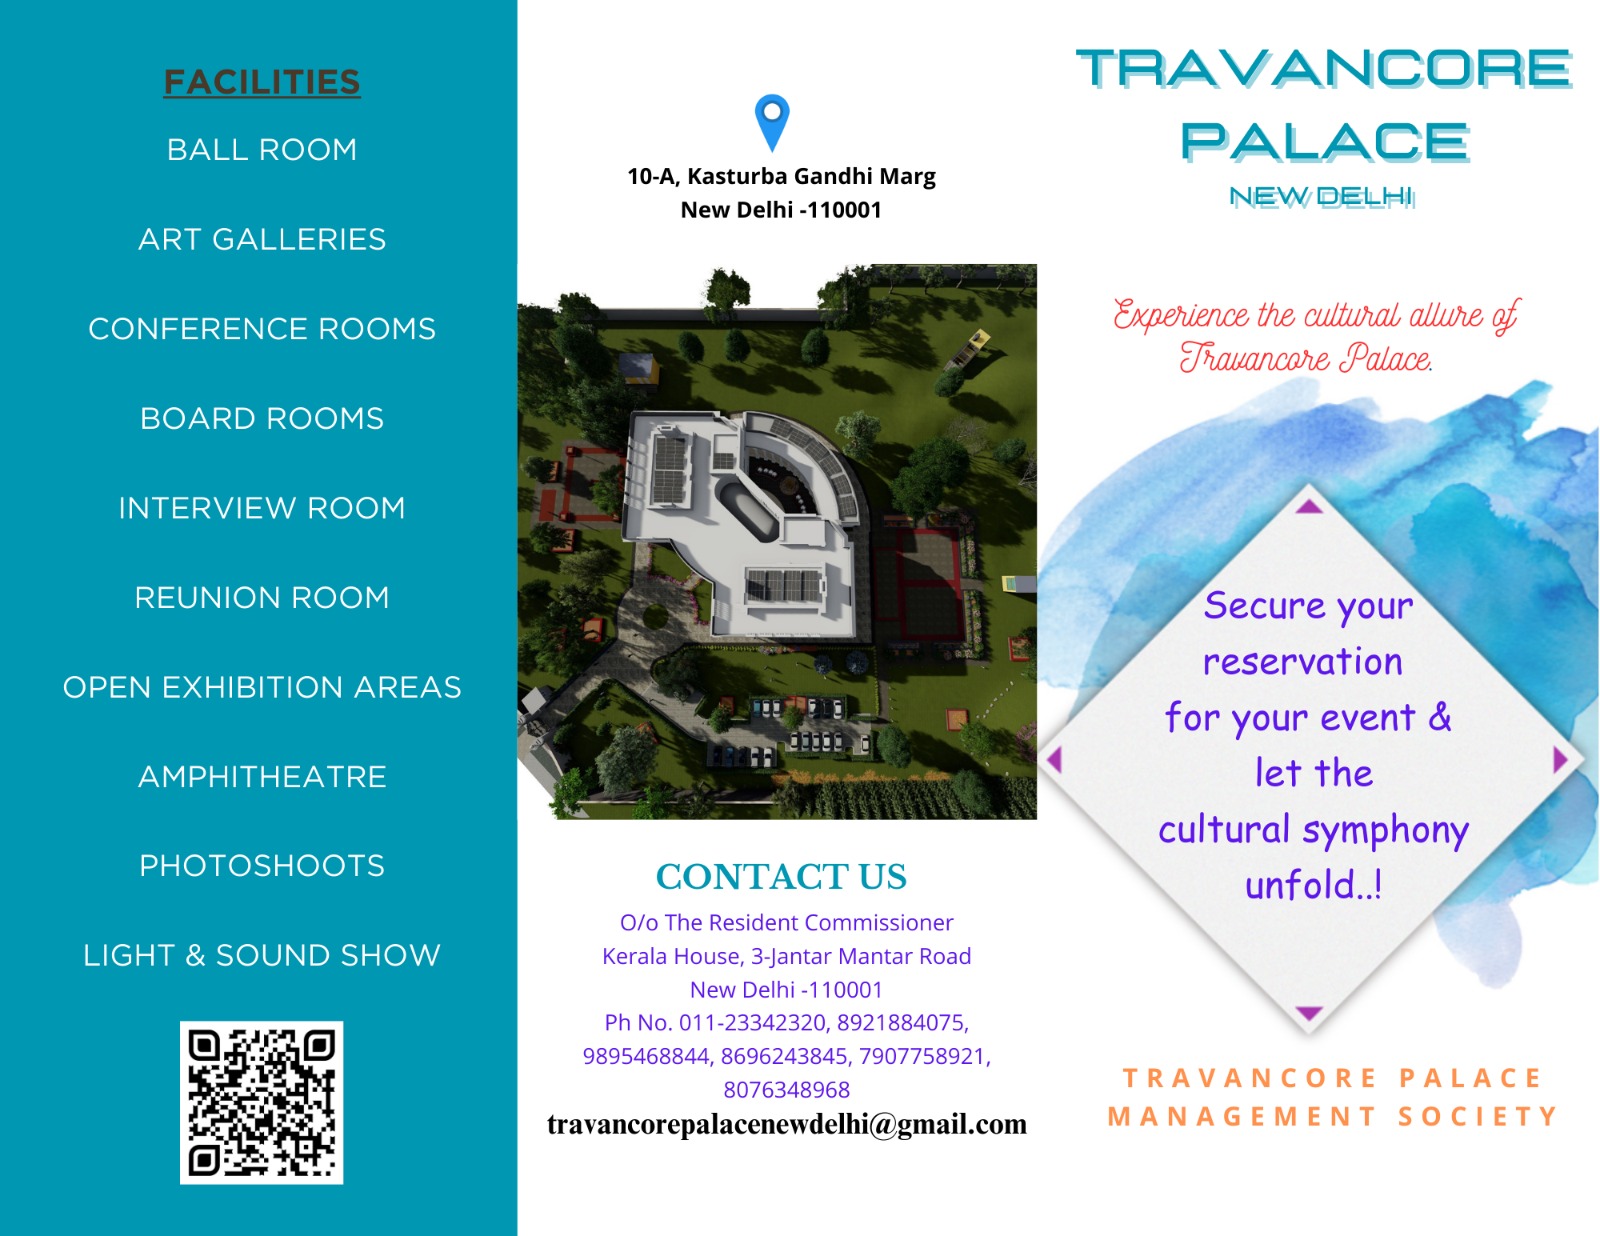 Reserve Facilities @ Travancore Palace